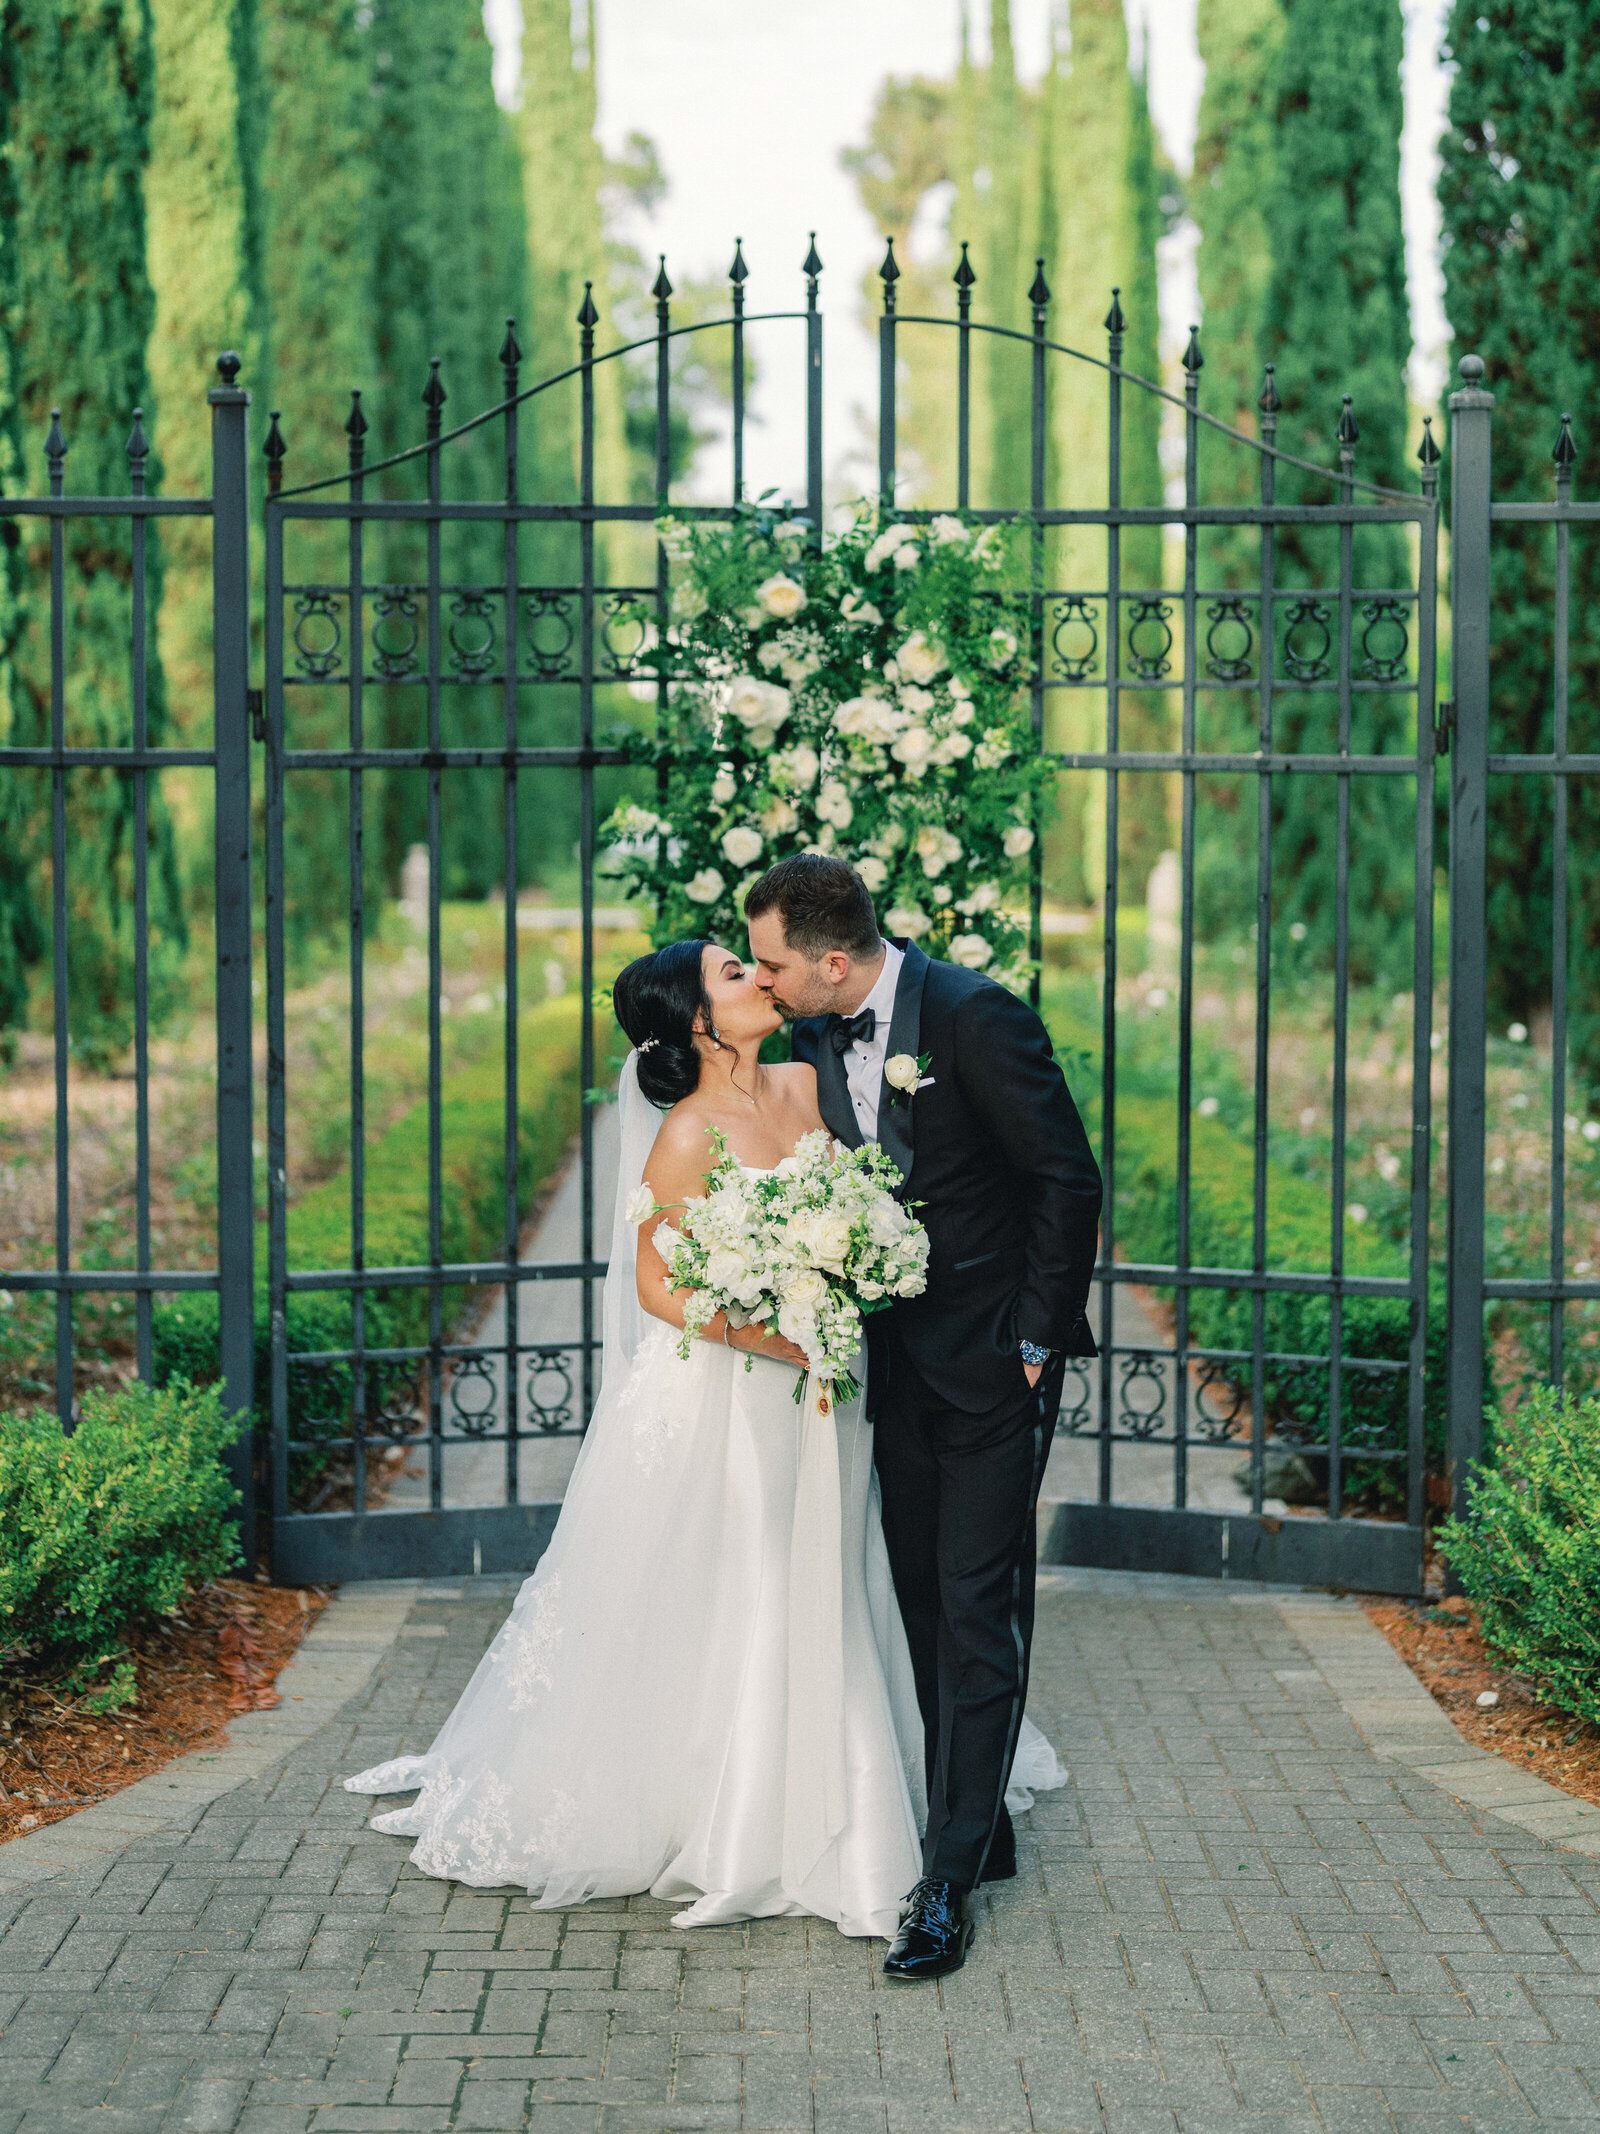 Ana & Andrei's Wedding - Villa Montalvo - Bay Area Wedding Florist (777)